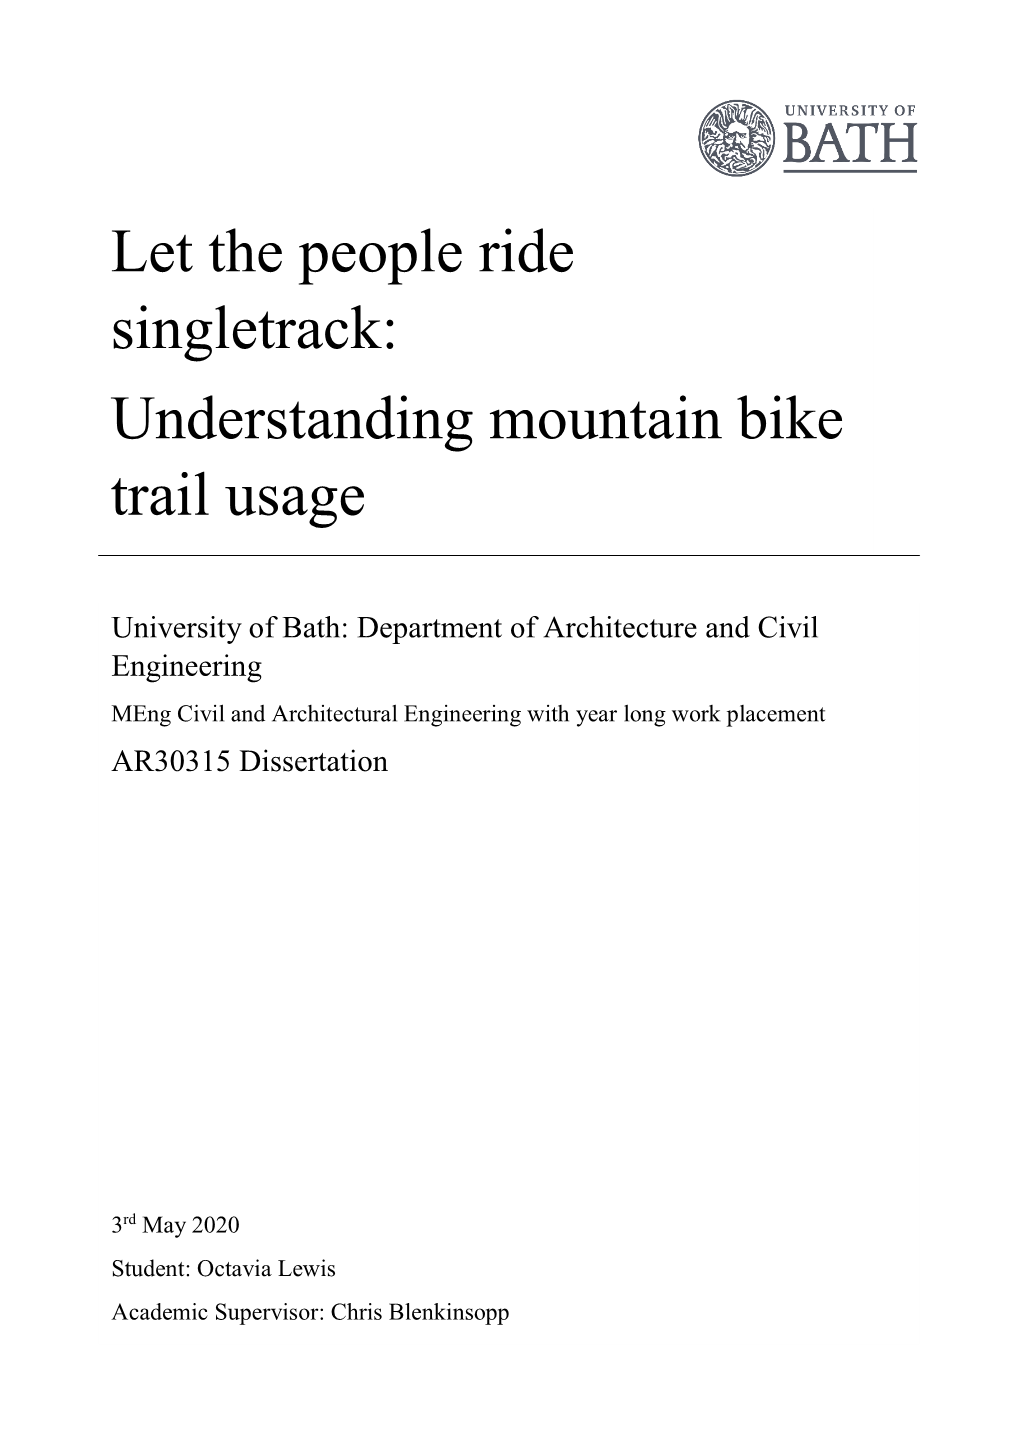 Let the People Ride Singletrack: Understanding Mountain Bike Trail Usage